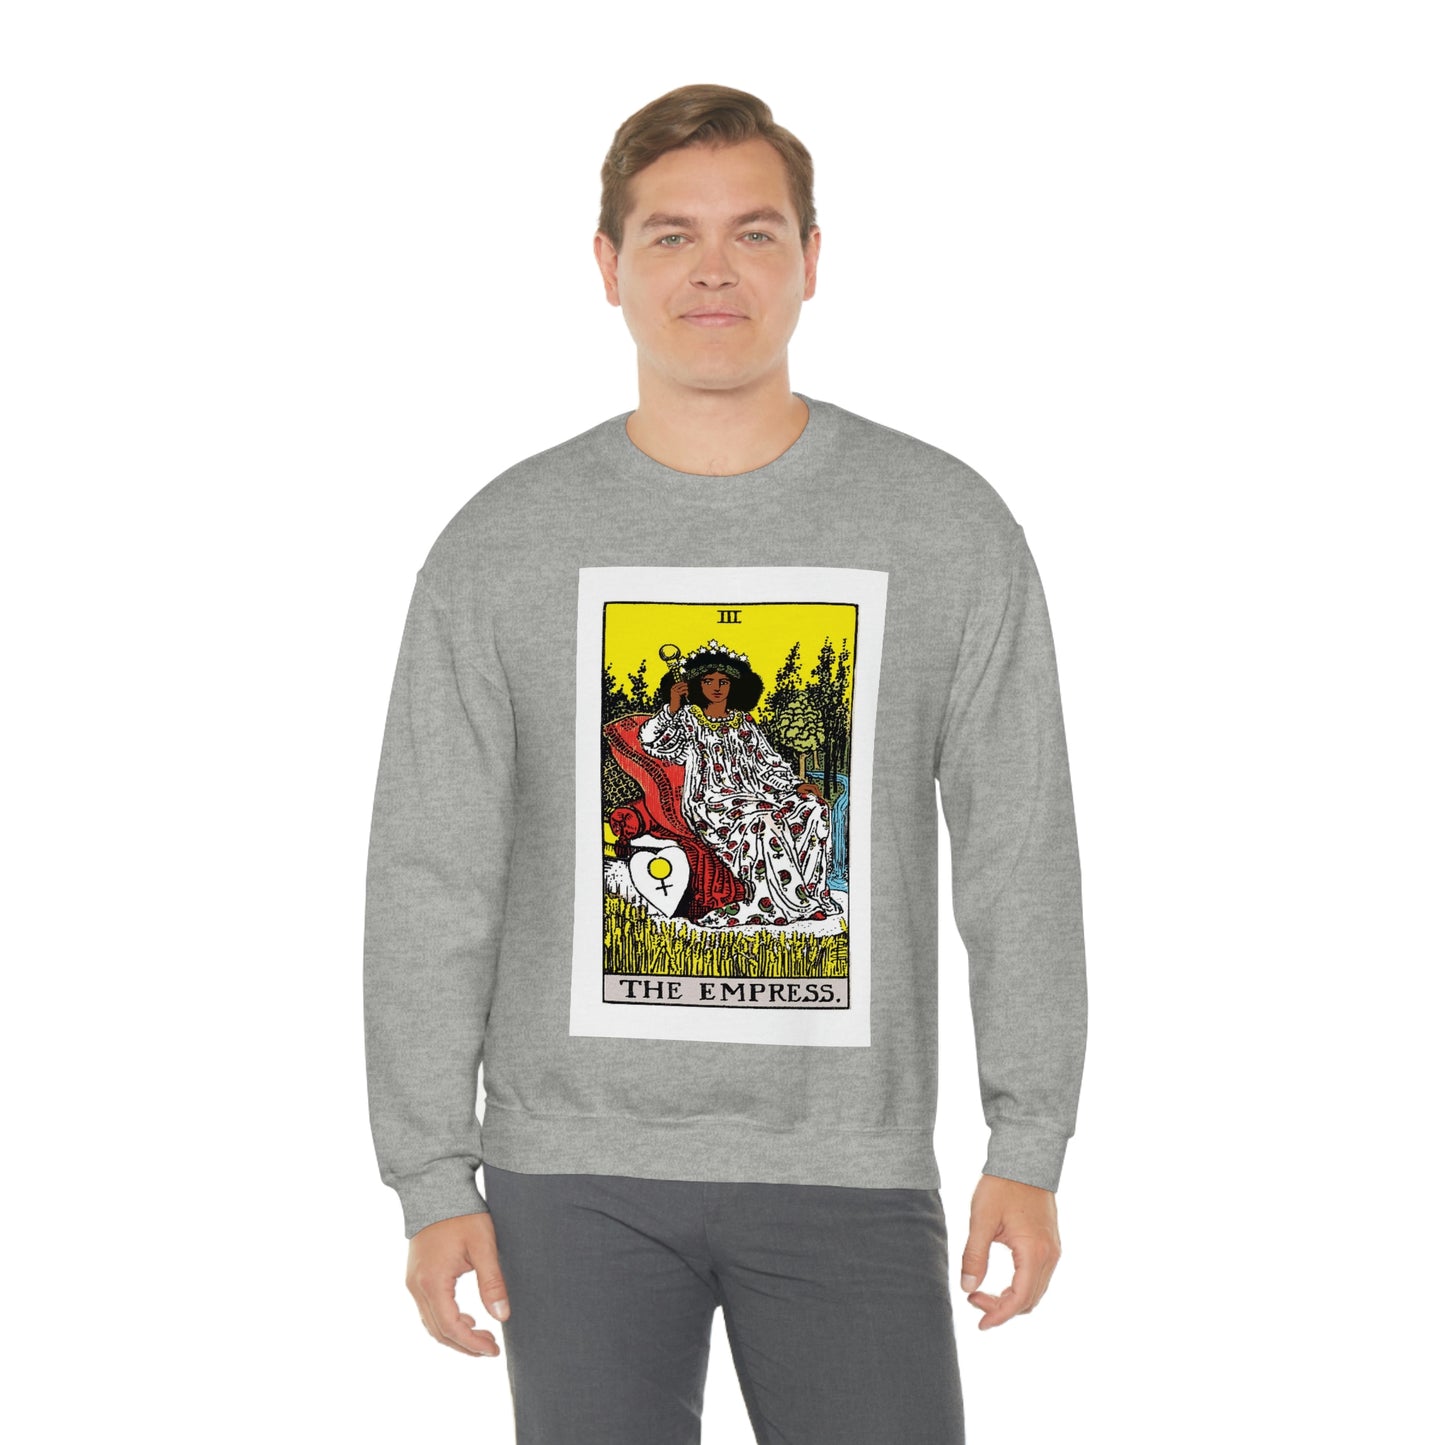 The Empress Tarot Card Sweatshirt